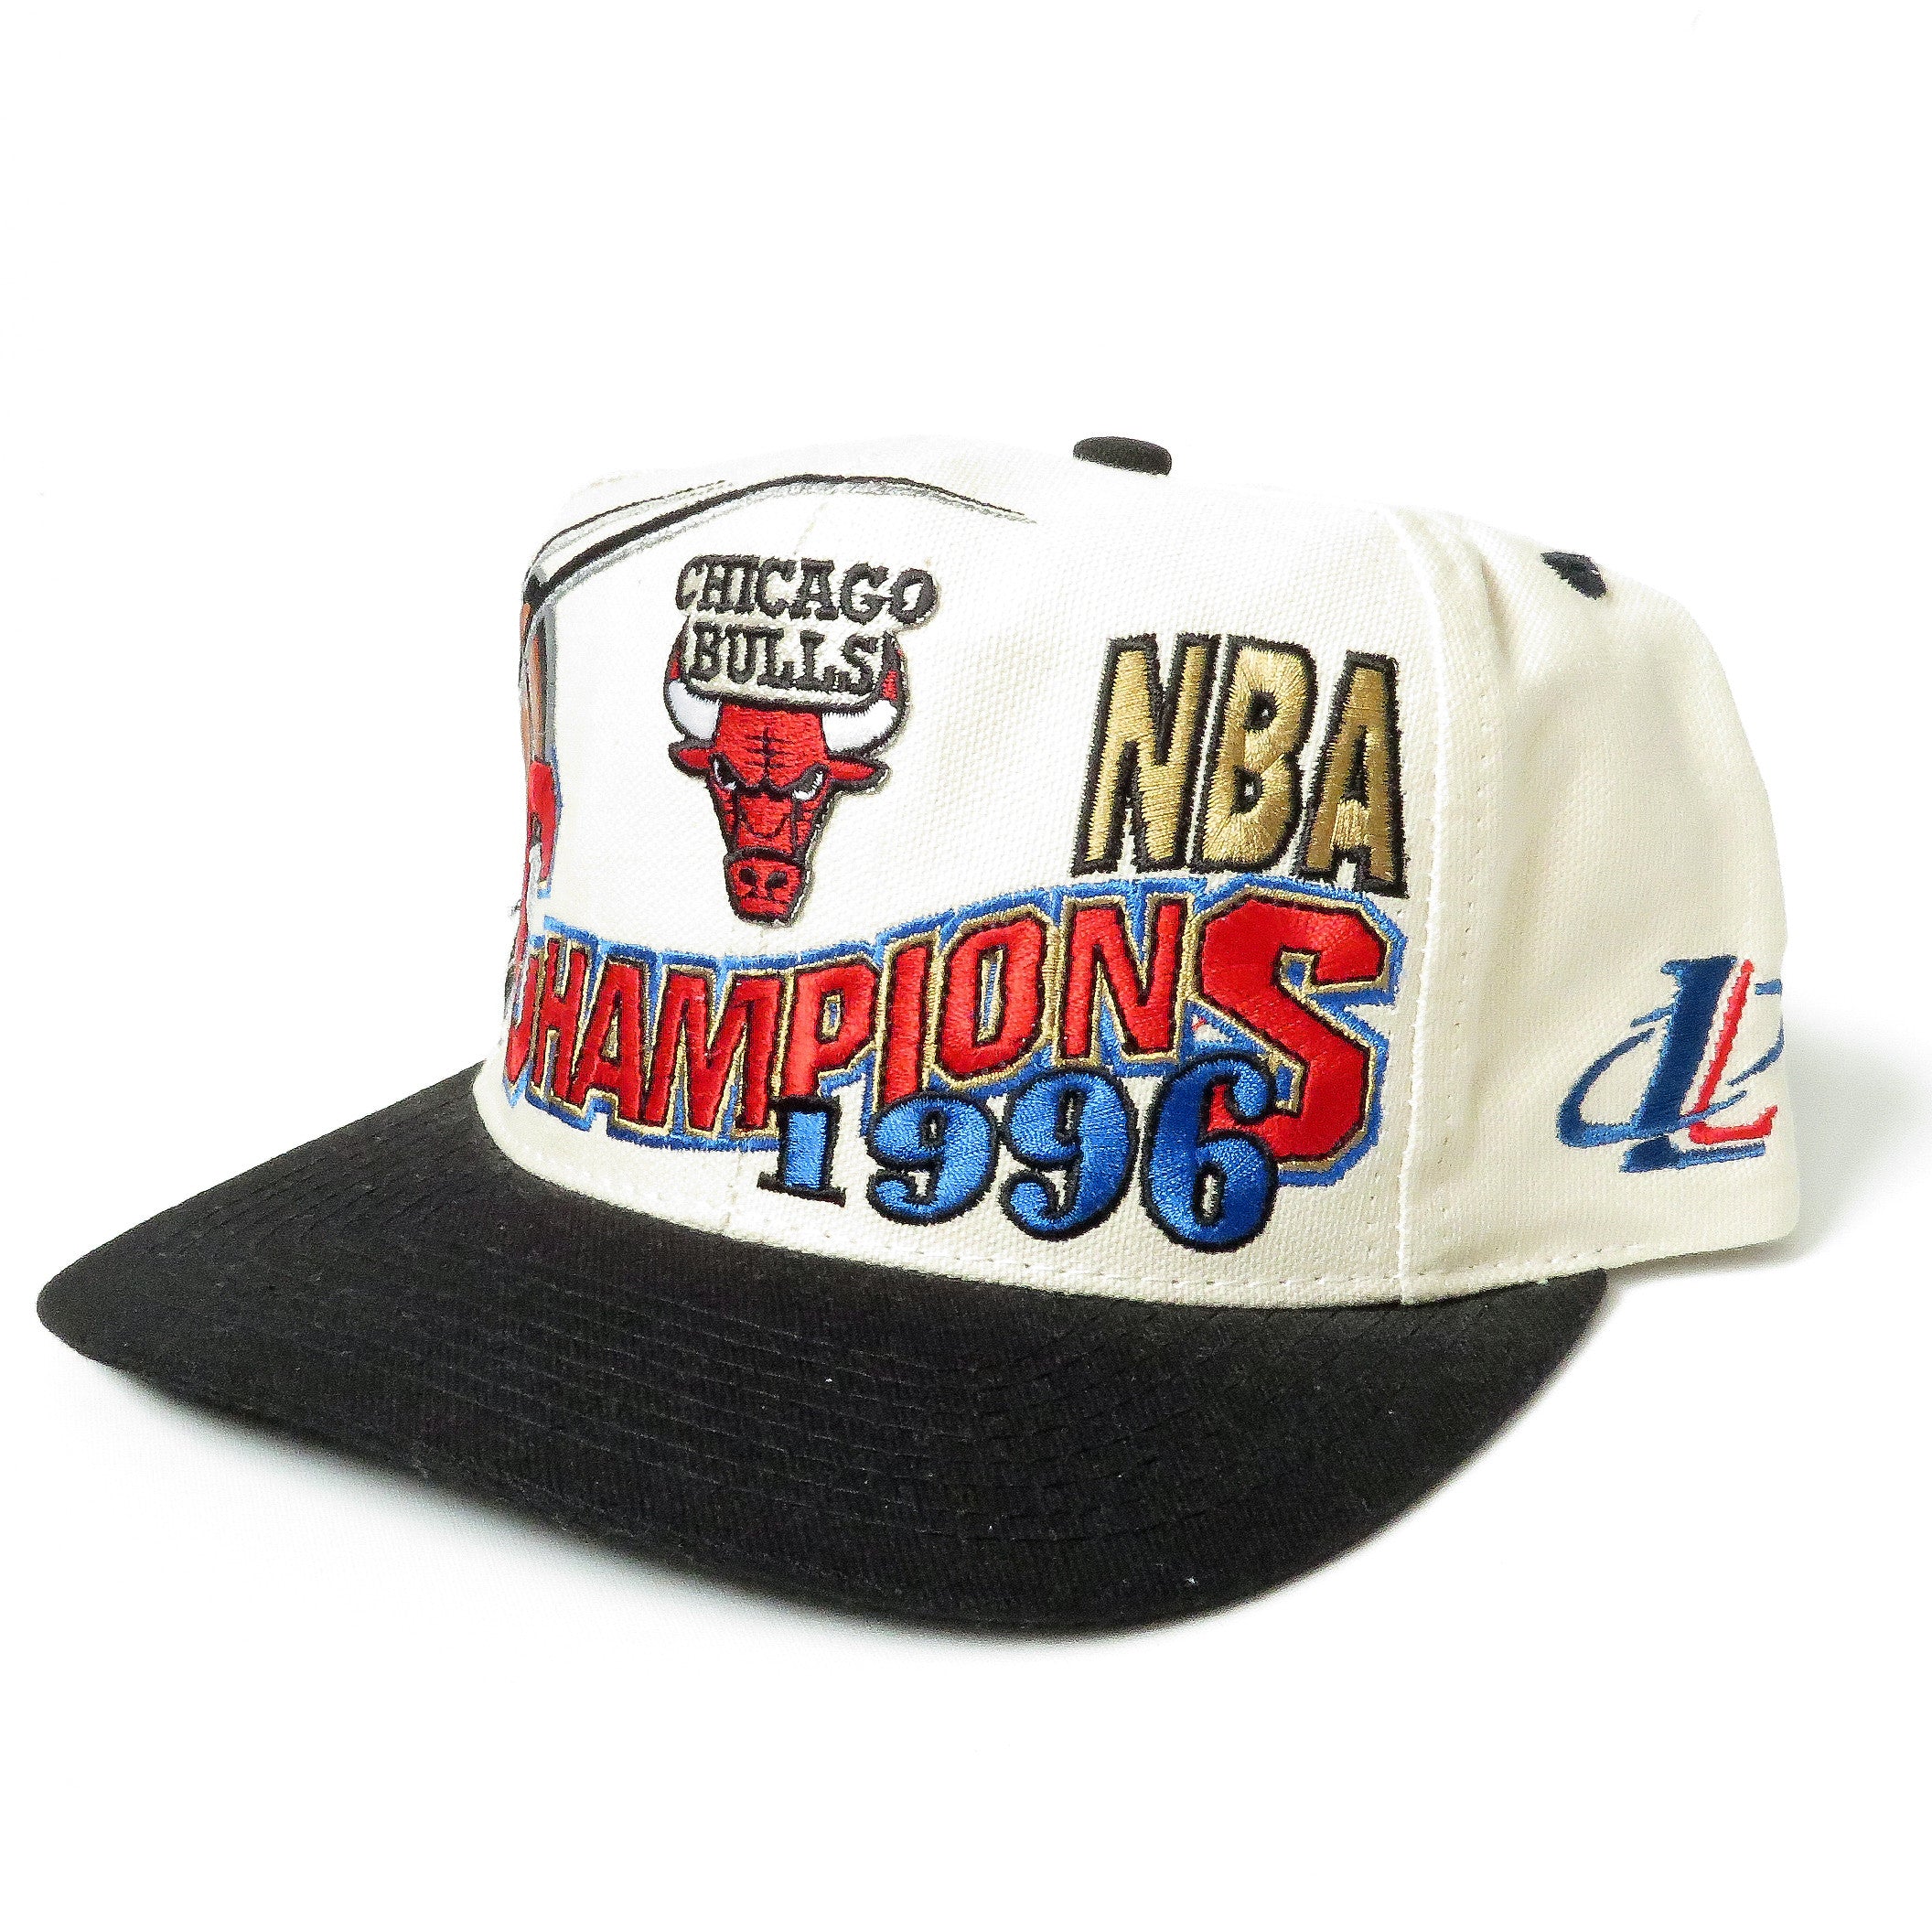 1996 bulls championship hat